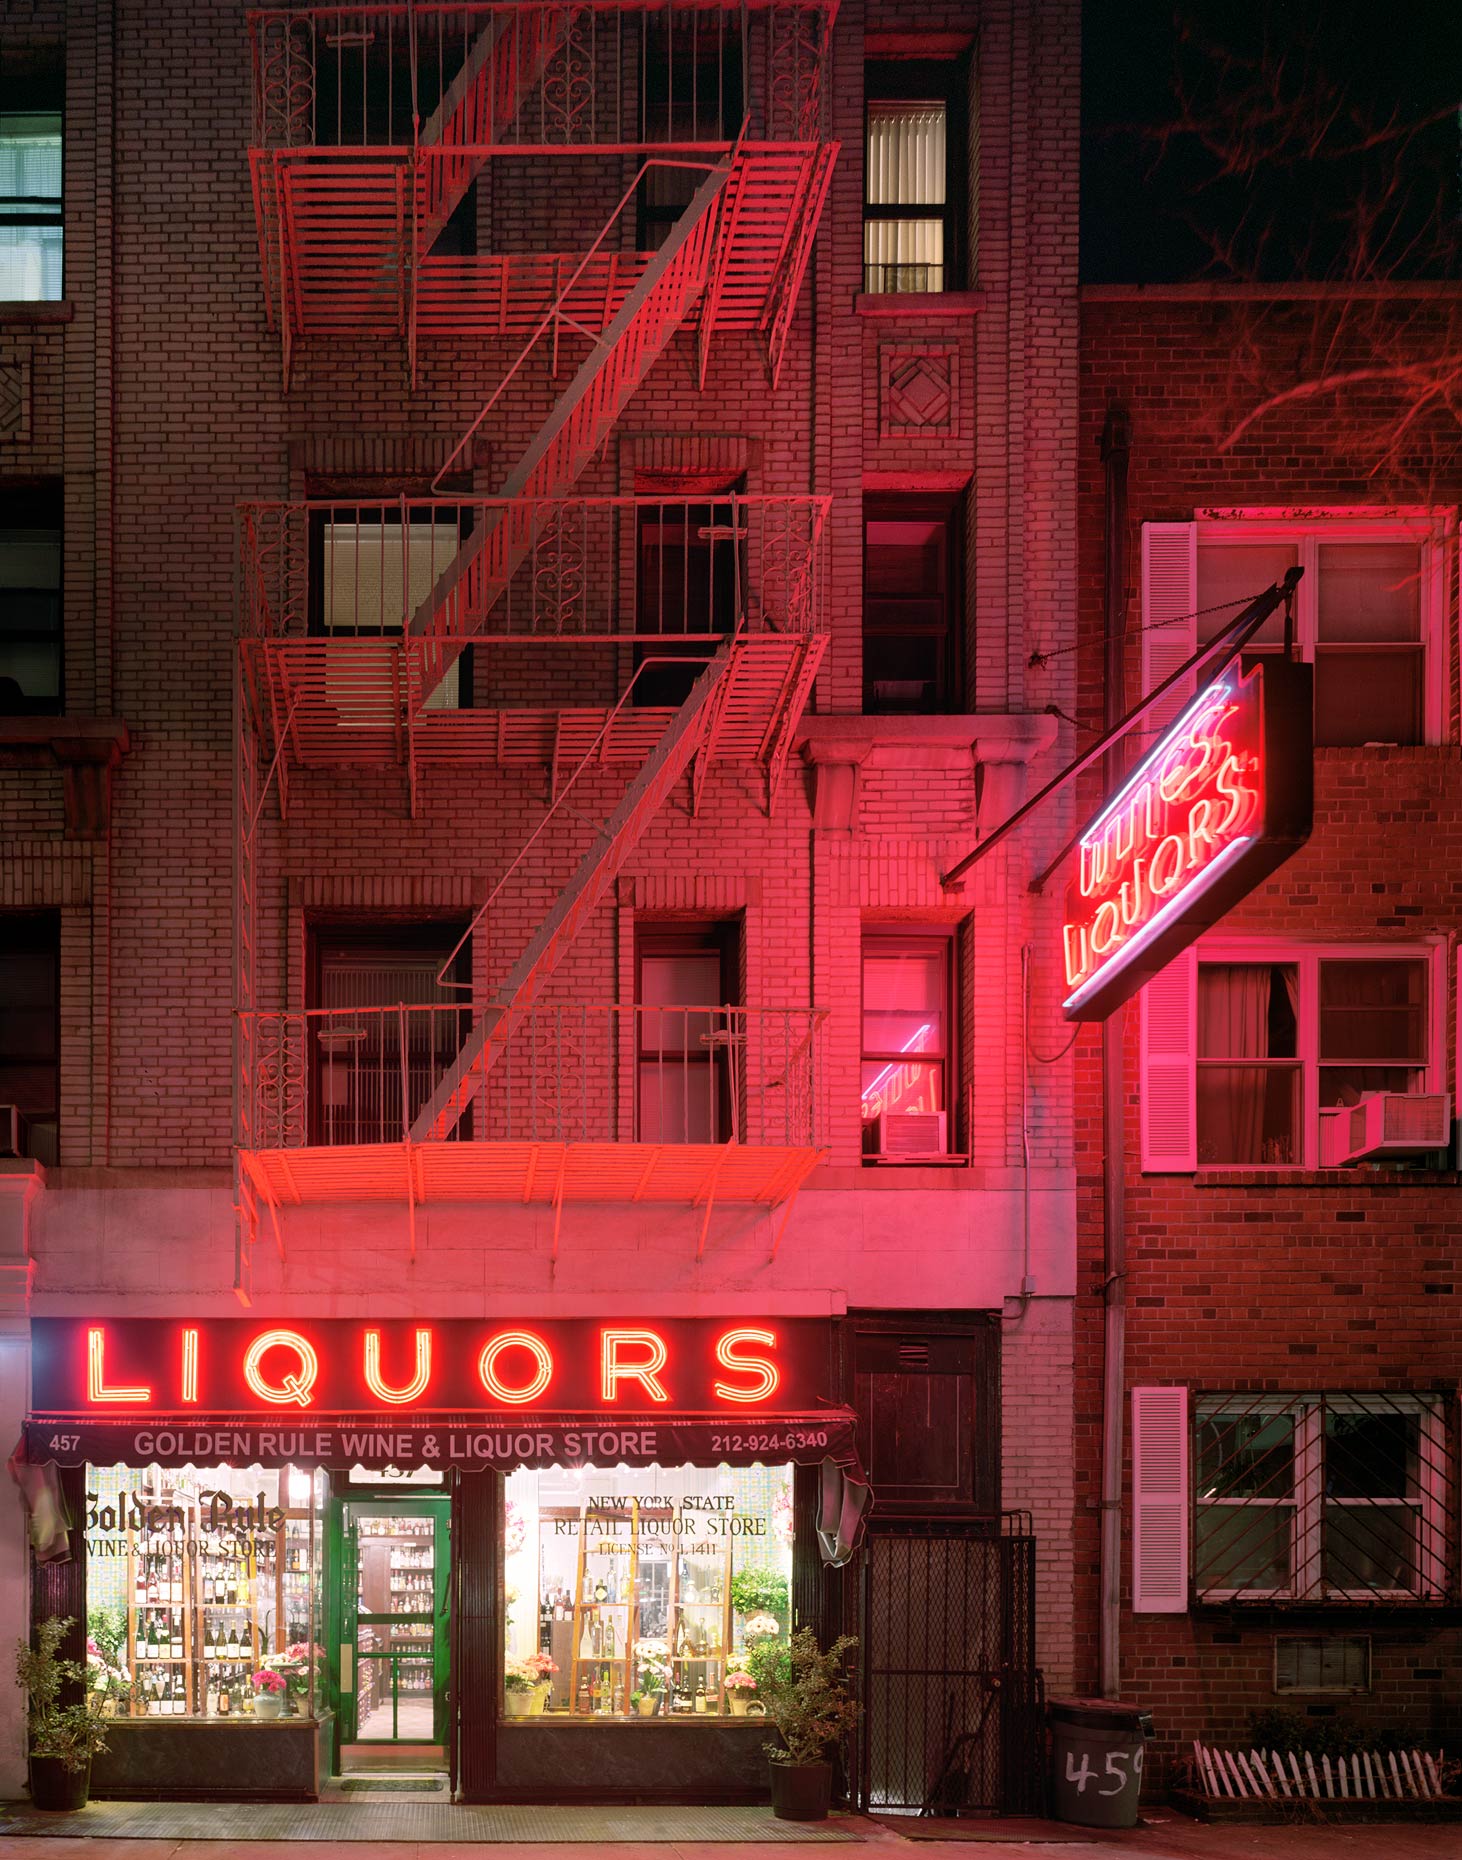 Golden Rule Wine & Liquor Store, 457 Hudson Street, West Village, New York